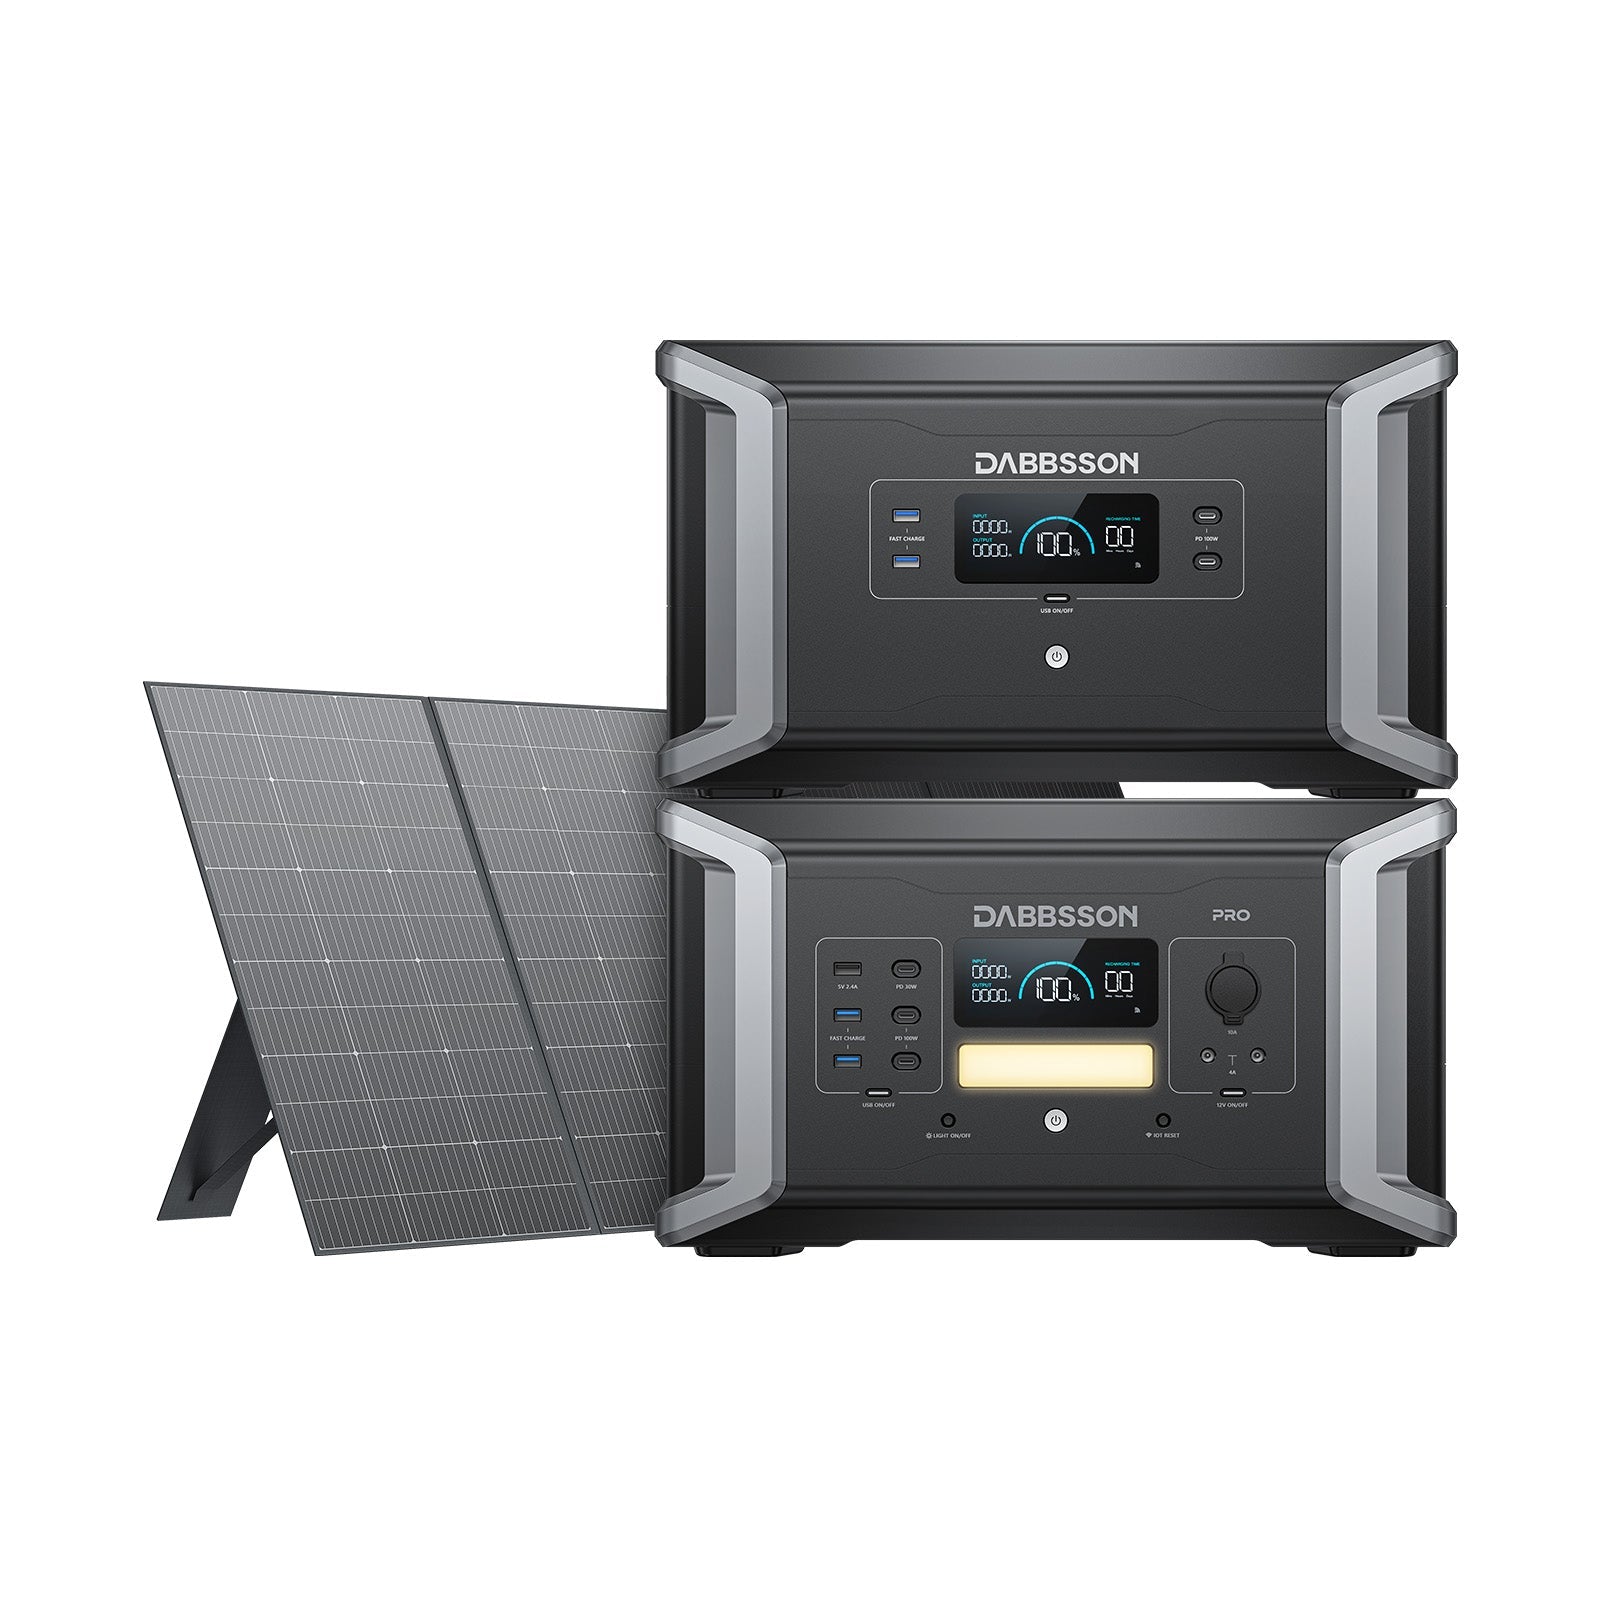 Dabbsson DBS1000 Pro Solar Generator - 1024Wh | 2000W